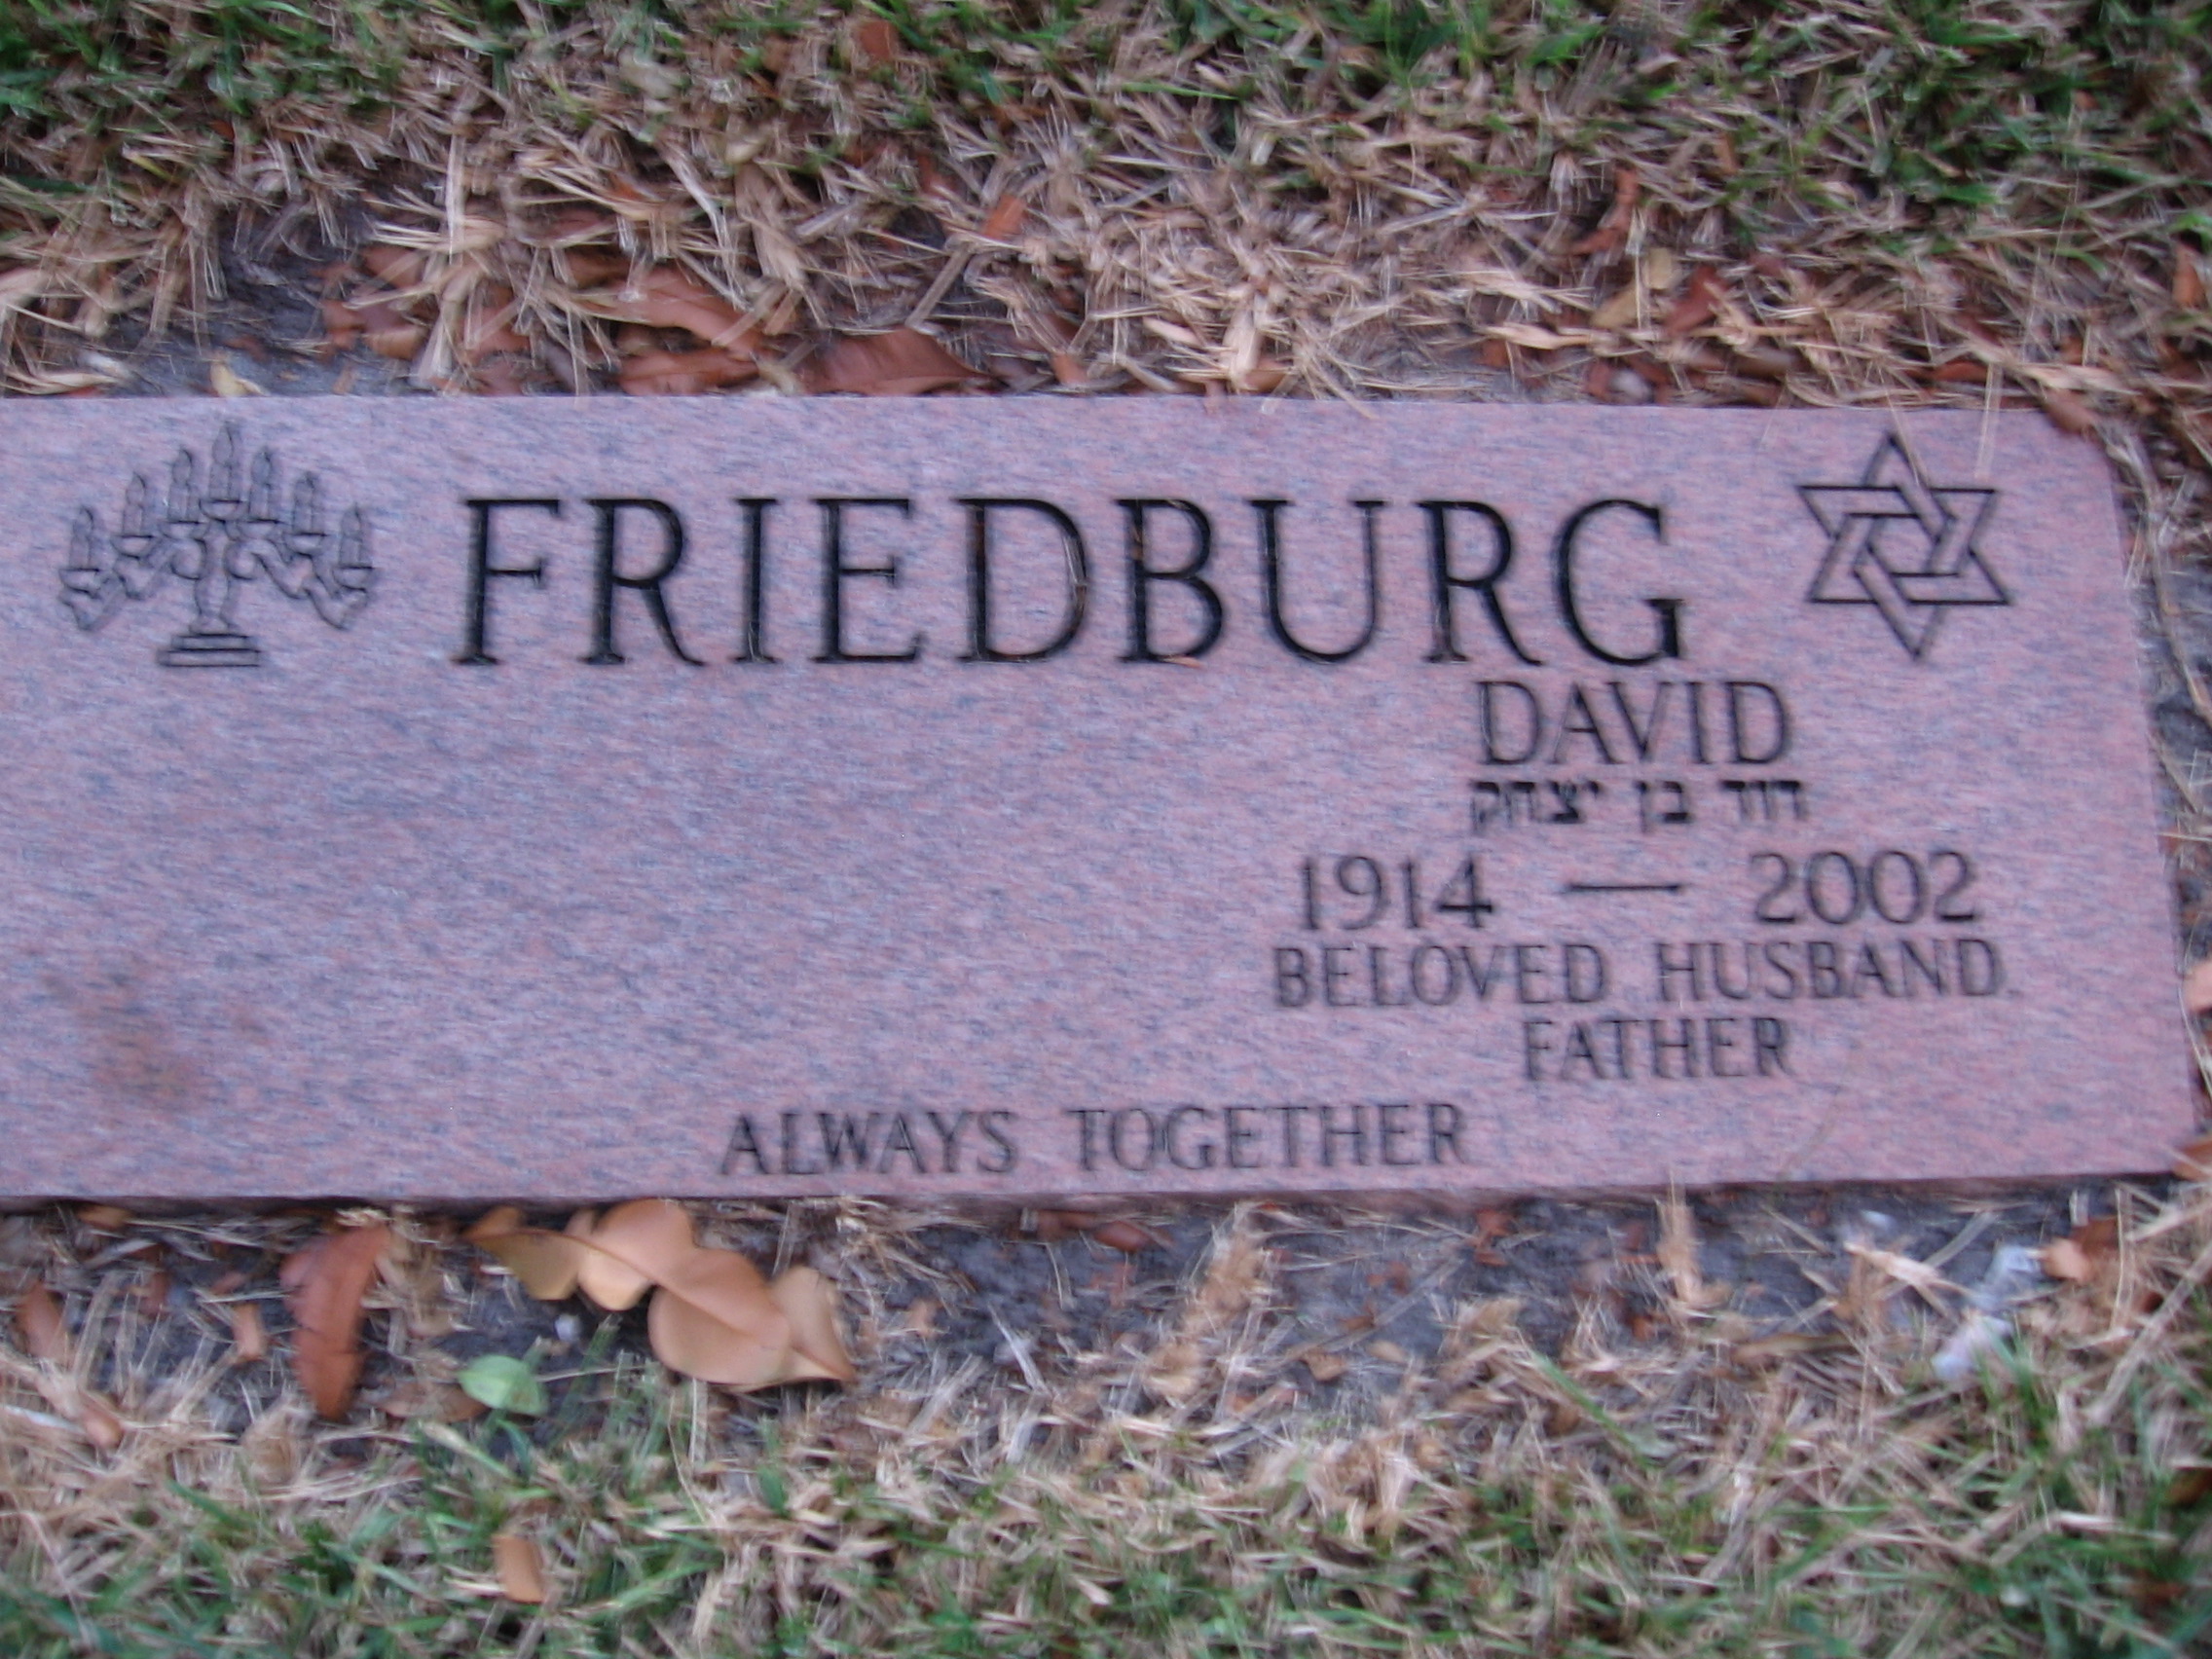 David Friedburg